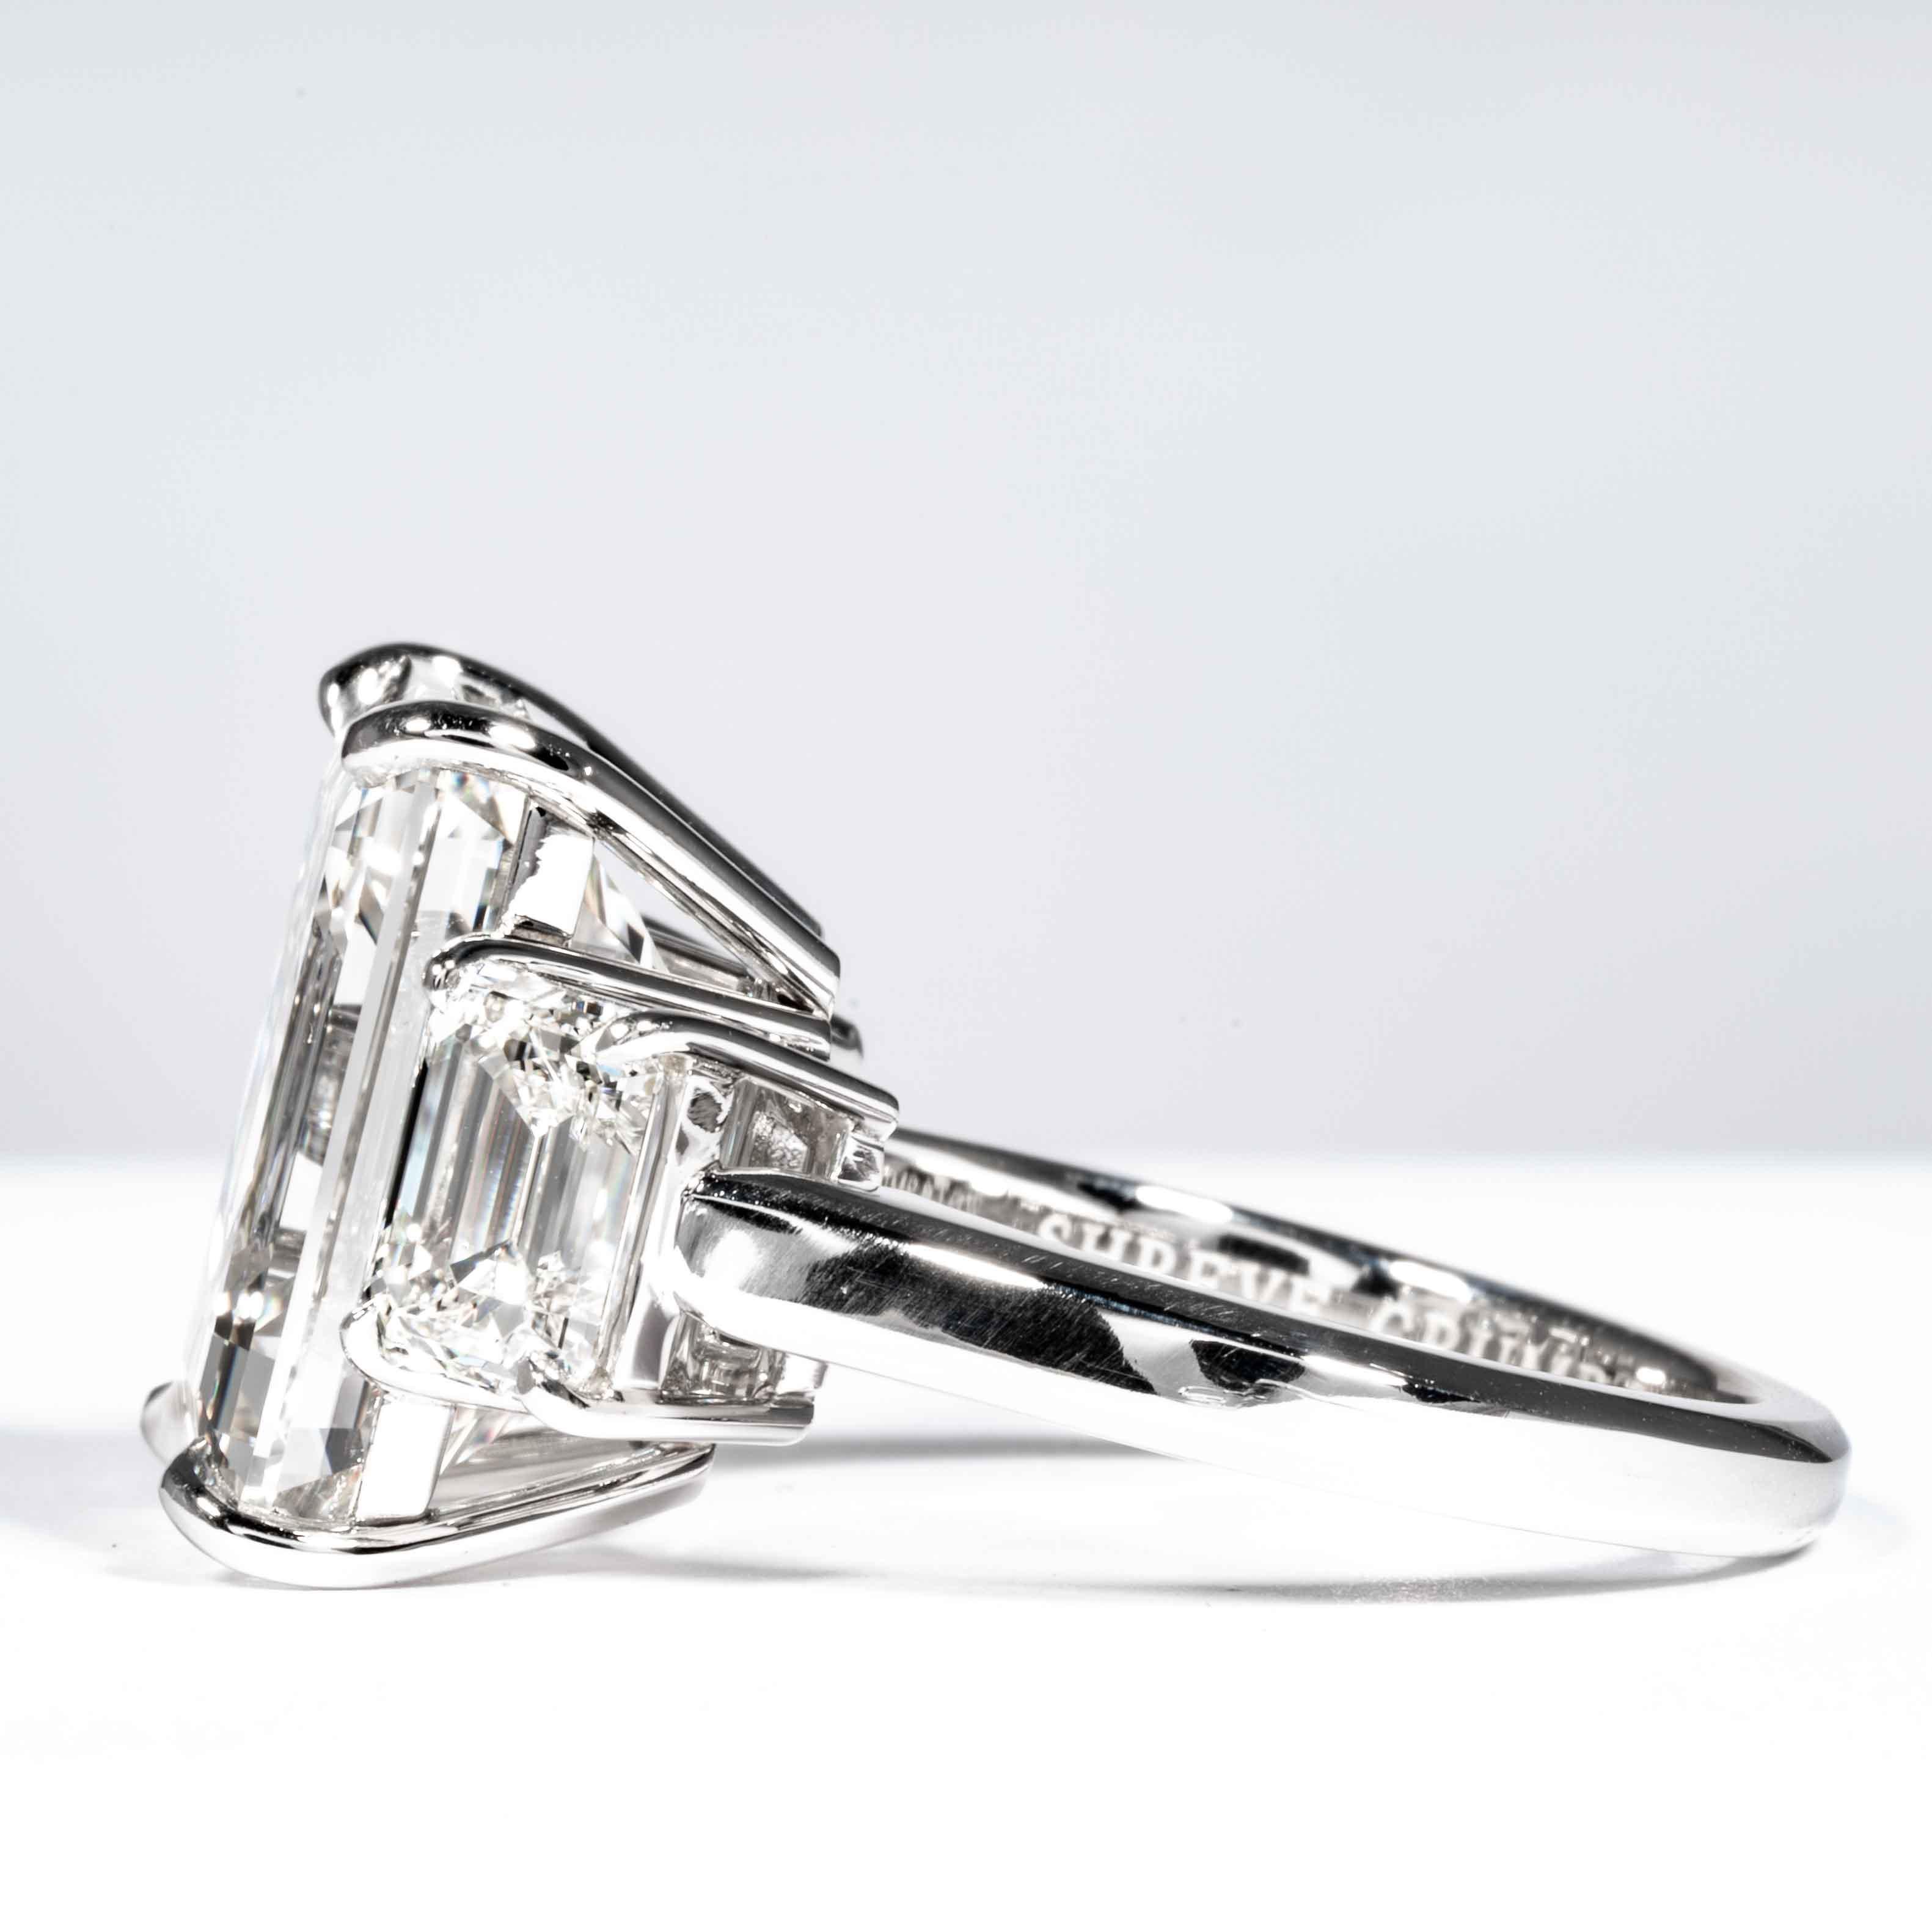 Shreve, Crump & Low GIA Certified 10.75 Carat K VS2 Emerald Cut Diamond Ring In New Condition For Sale In Boston, MA